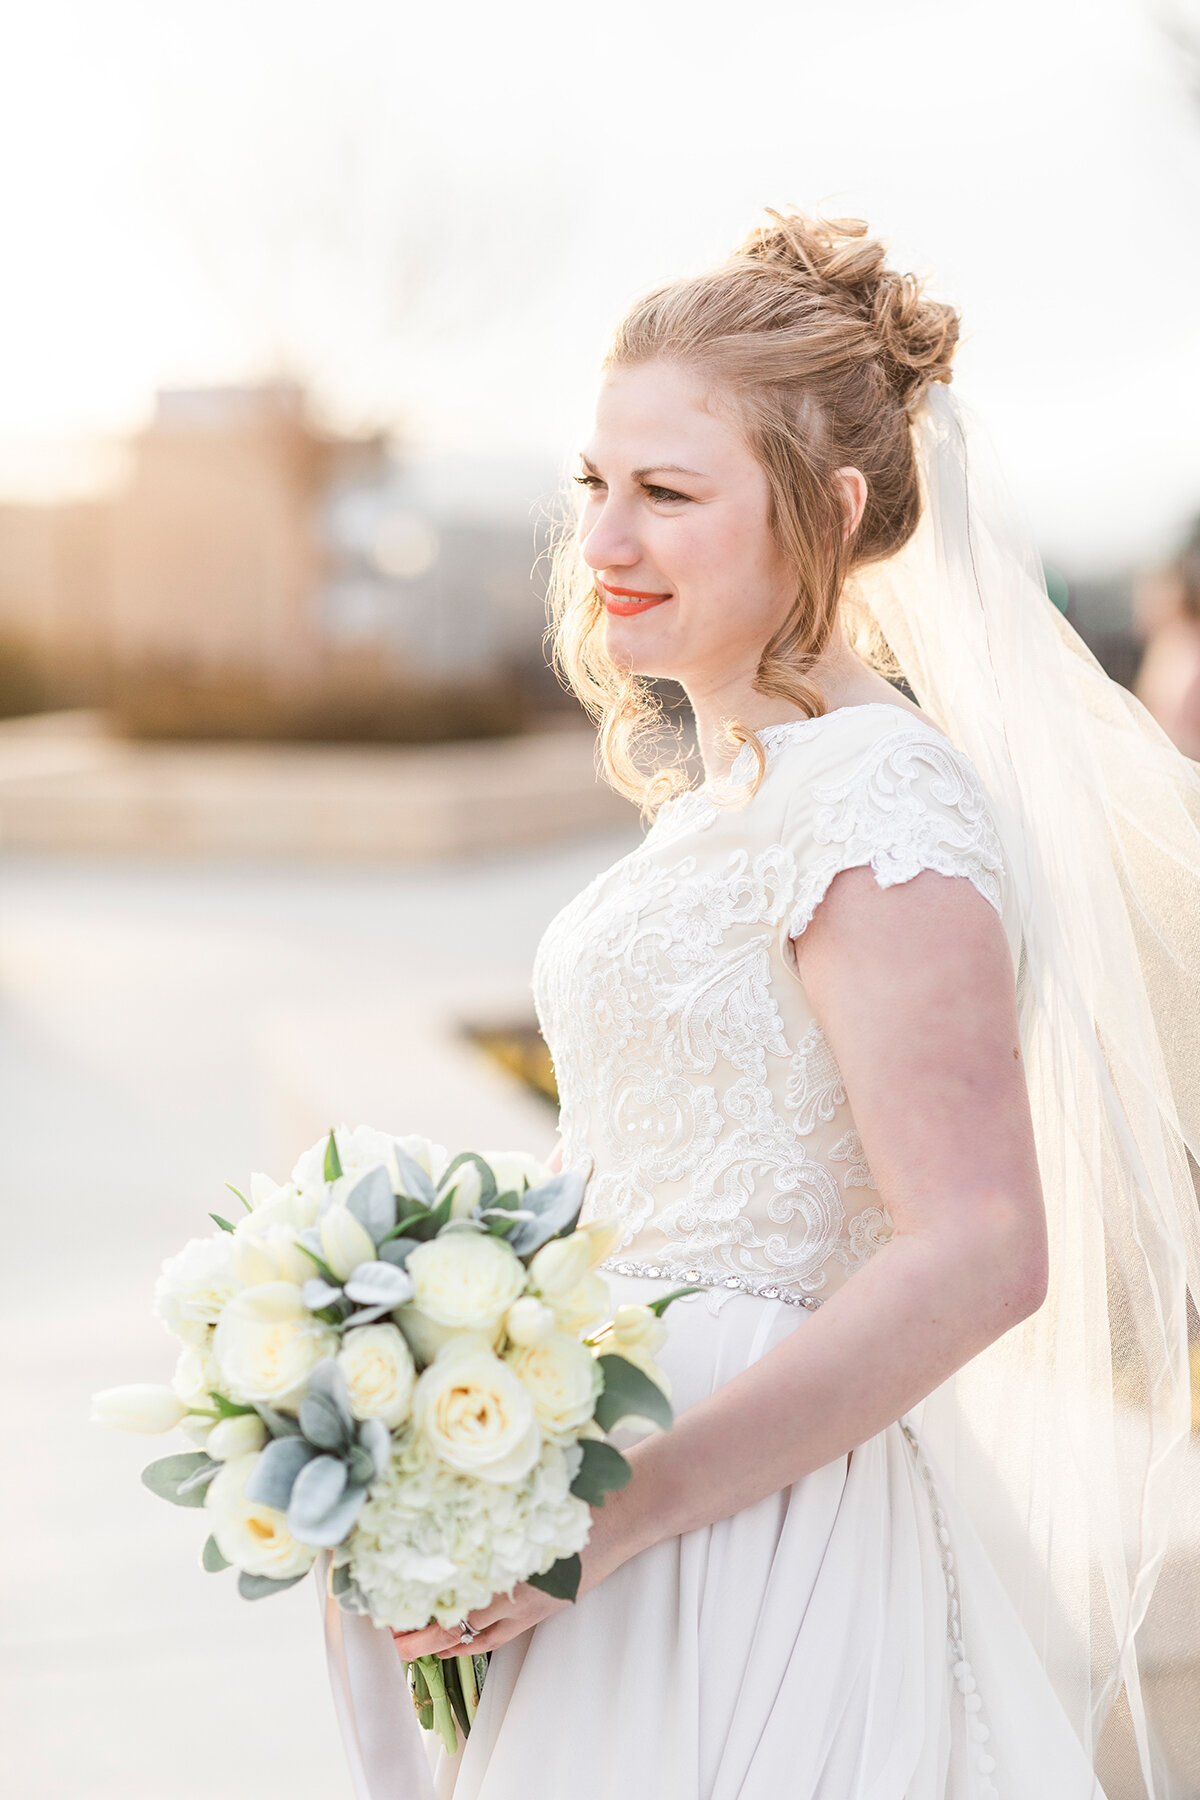 4 Undone Hairstyles For An Effortless Bridal Look - Wedding Journal